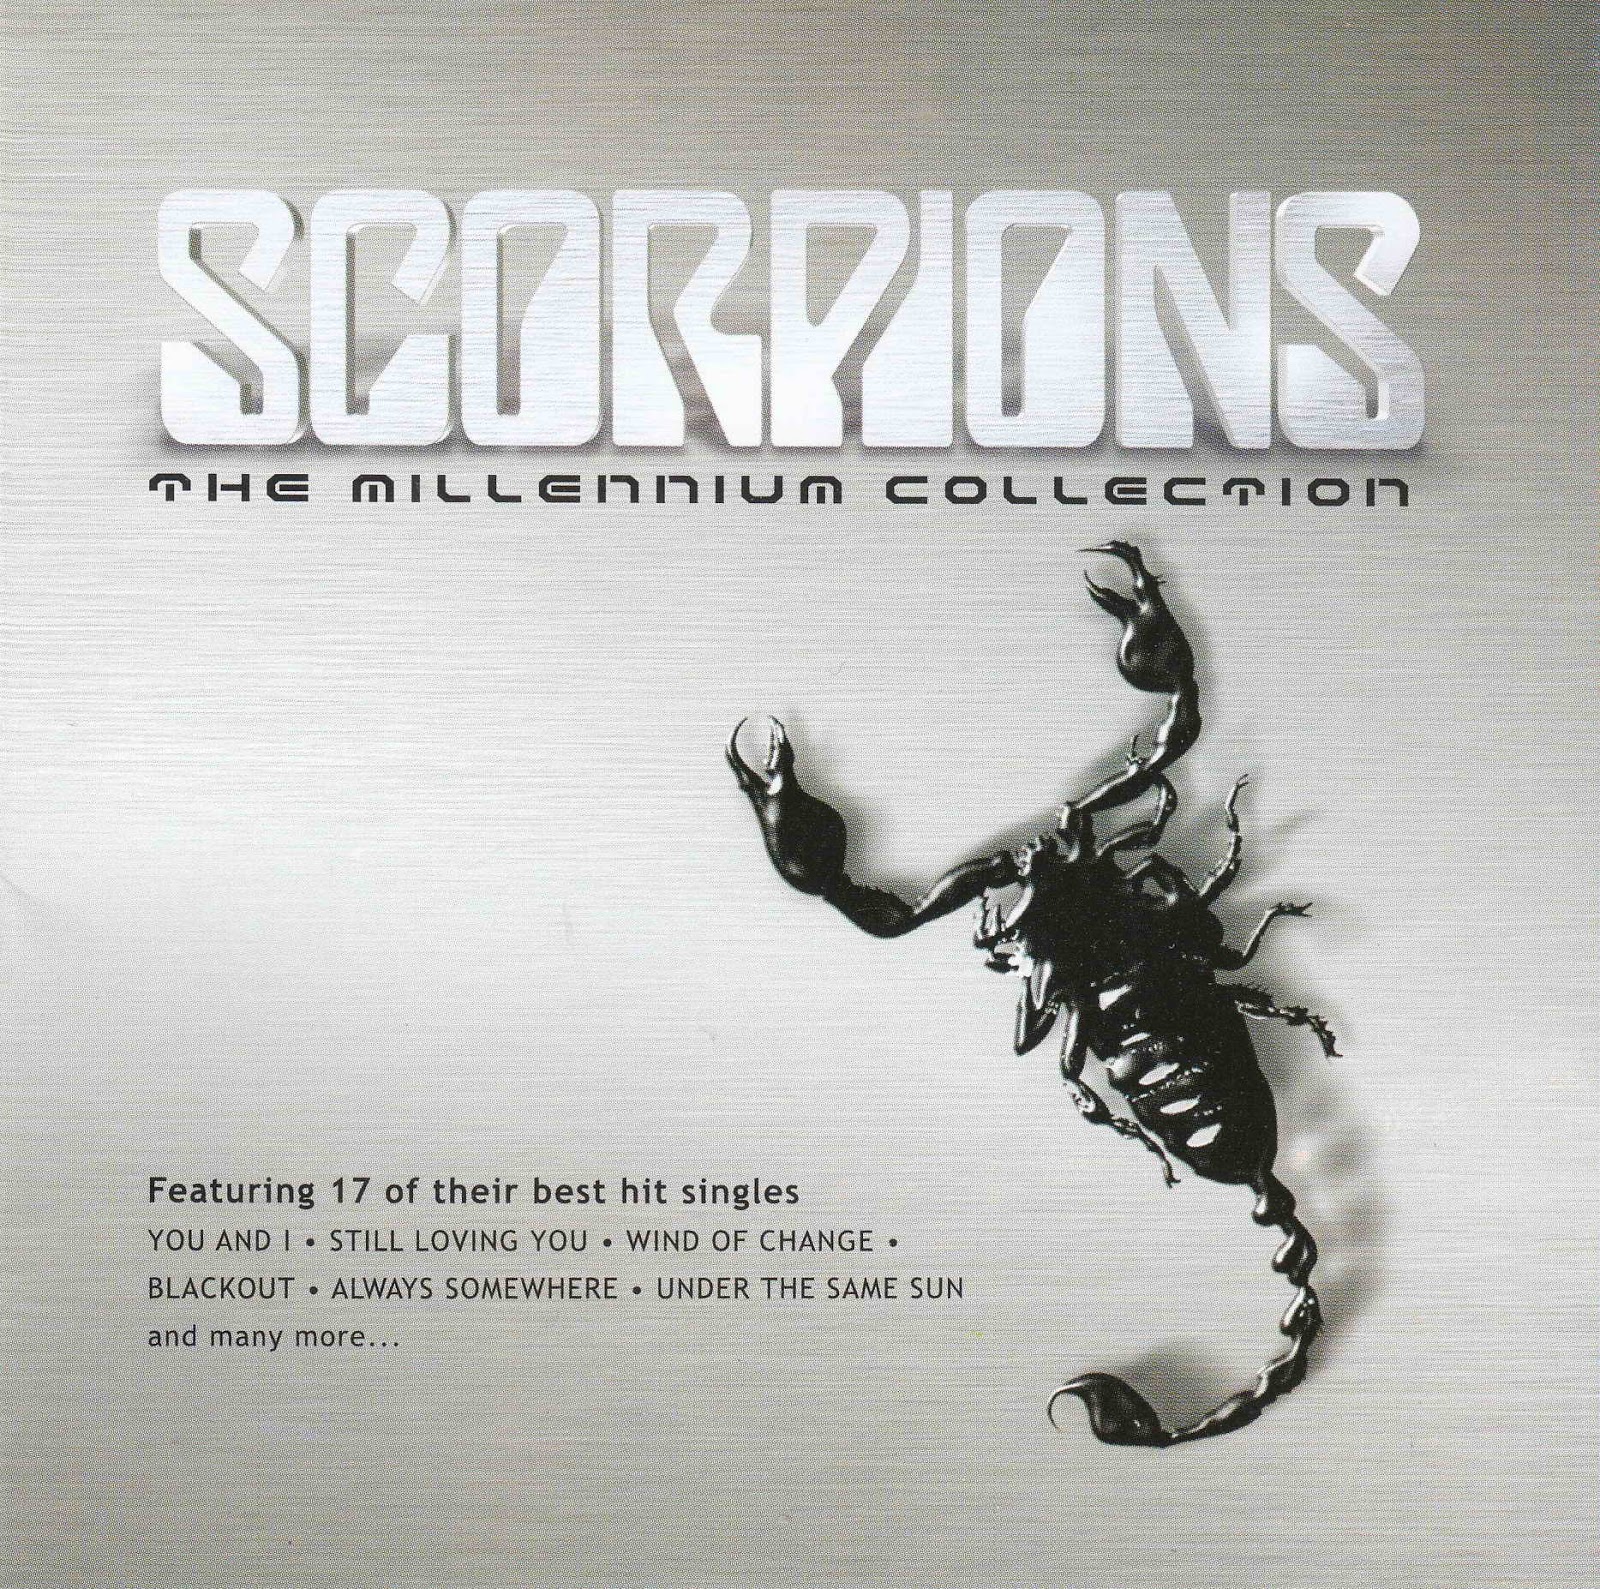 Scorpions somewhere. Scorpions обложка. Scorpions - always somewhere обложка. Scorpions CD группы. Scorpions группа обложки альбомов.